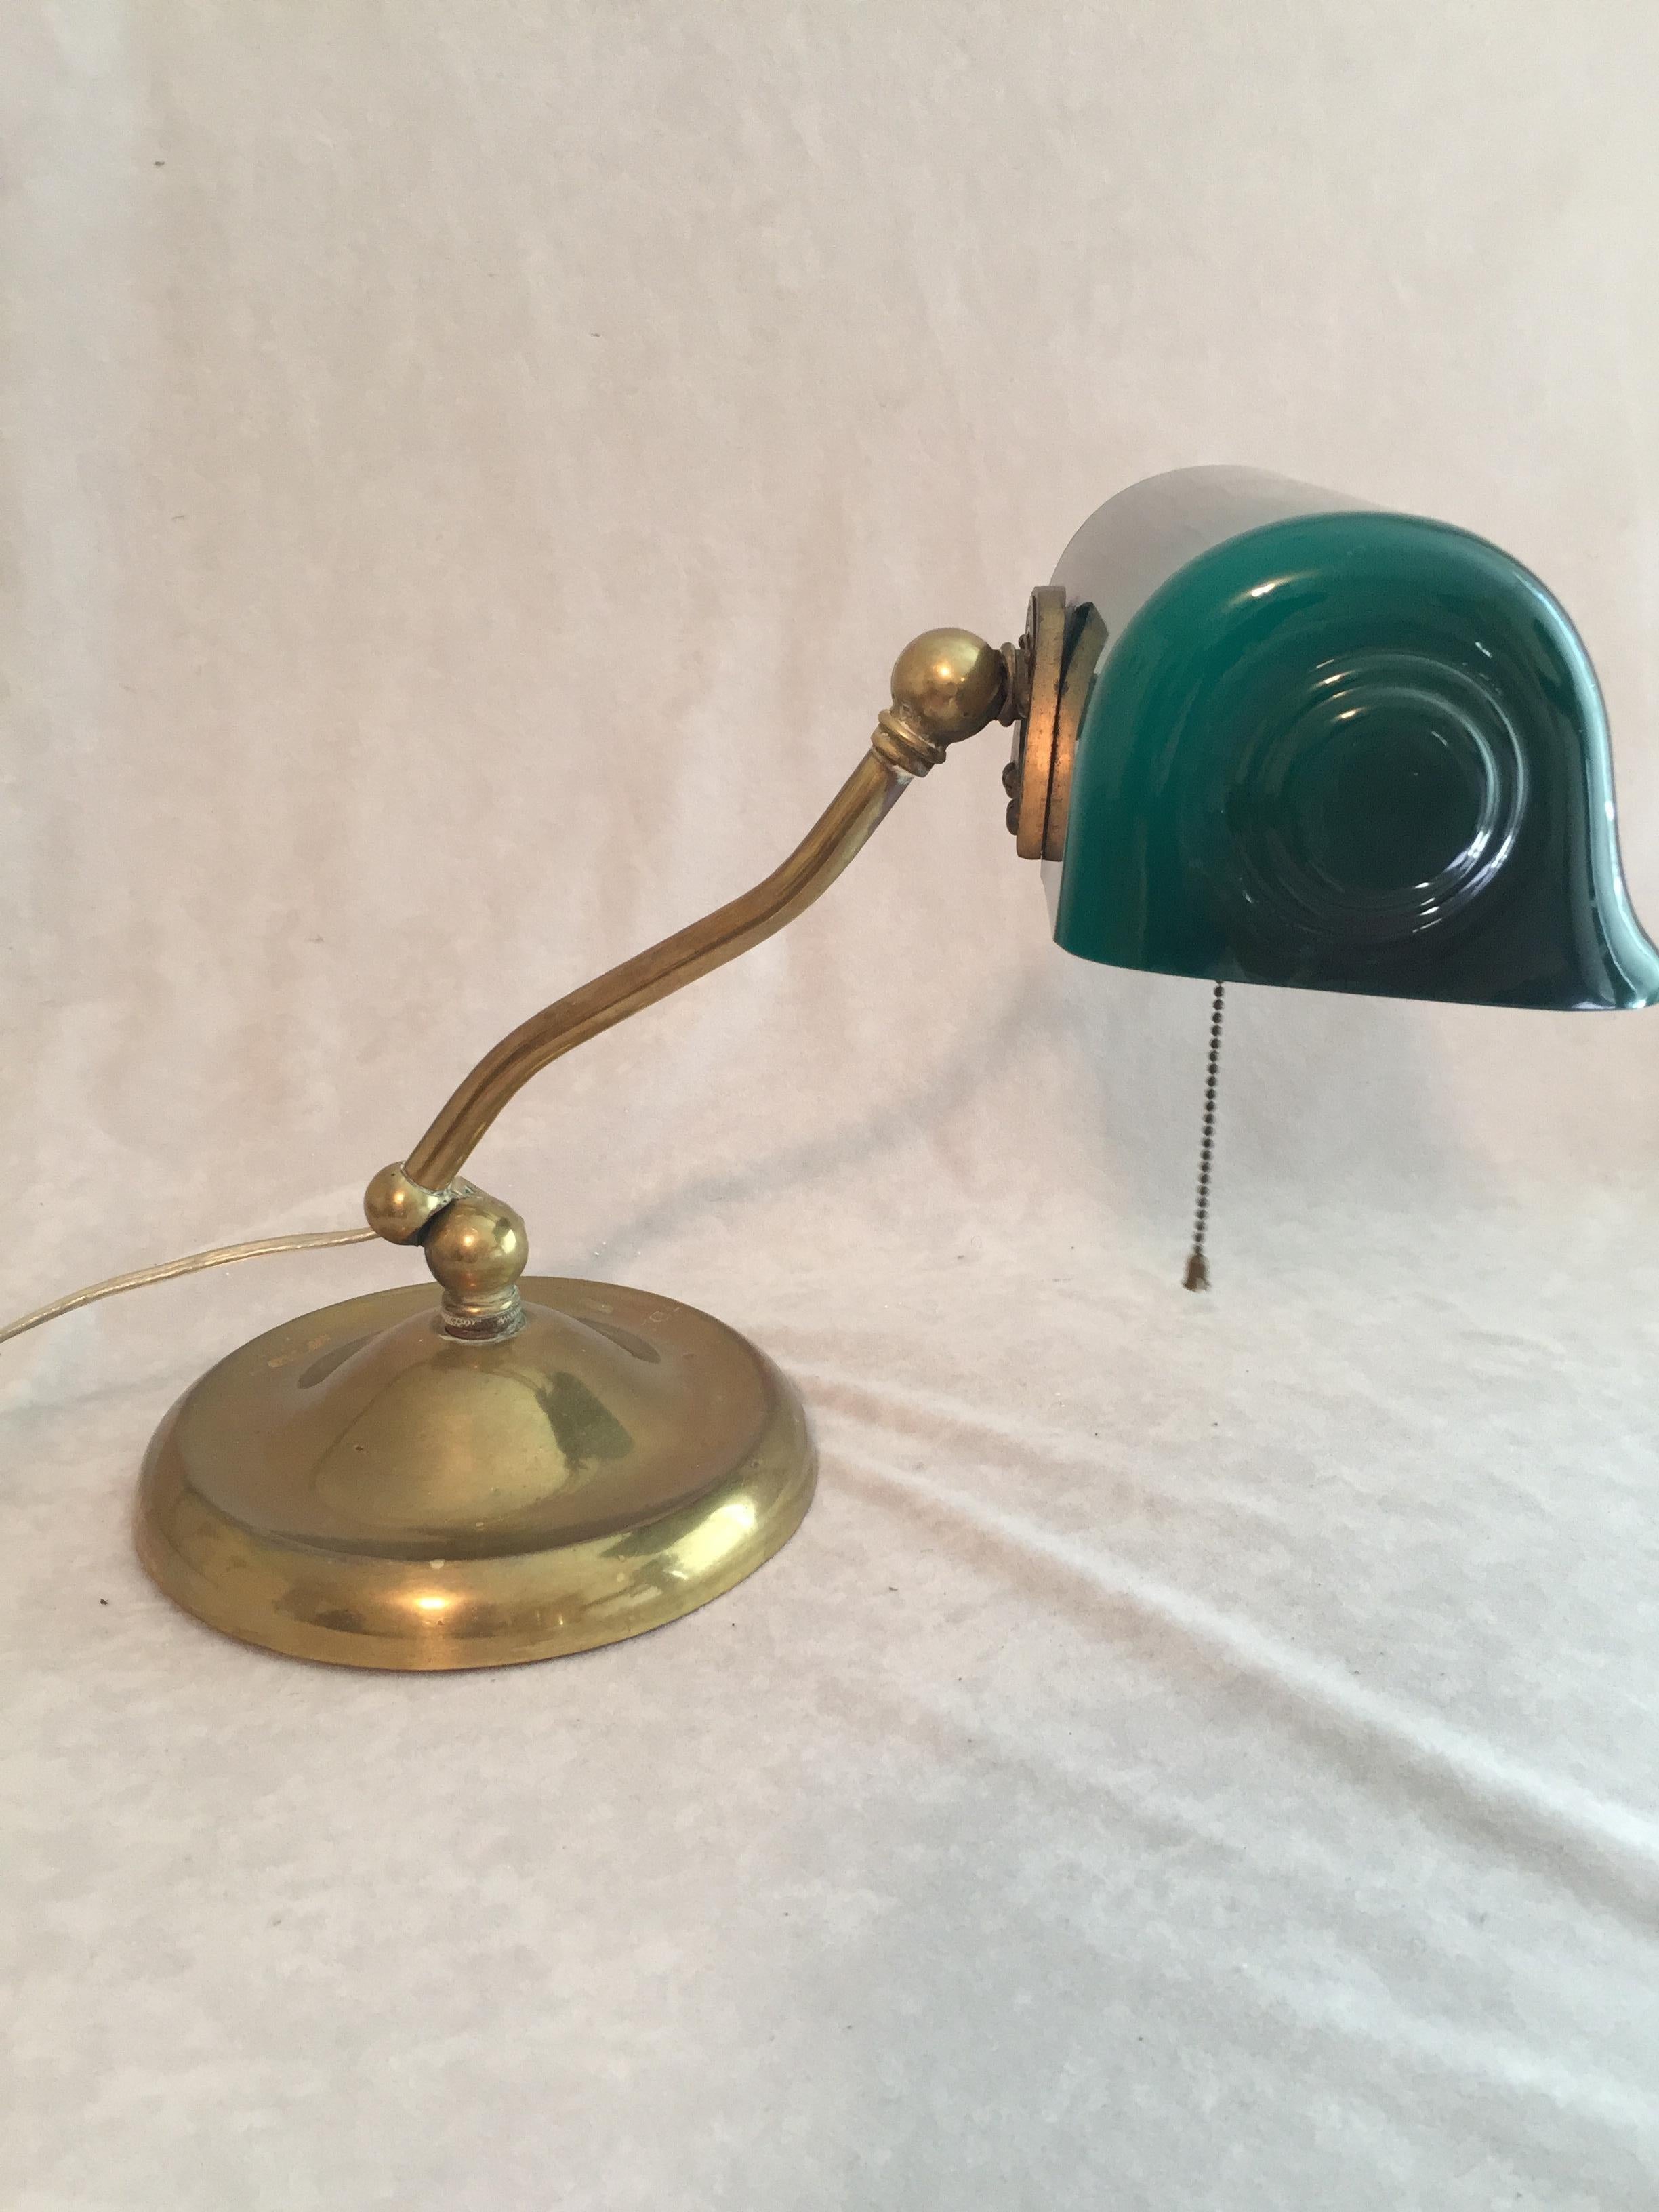 Arts and Crafts Antique Banker's Desk Lamp w/ Green Shade Signed Verdelite, ca. 1920